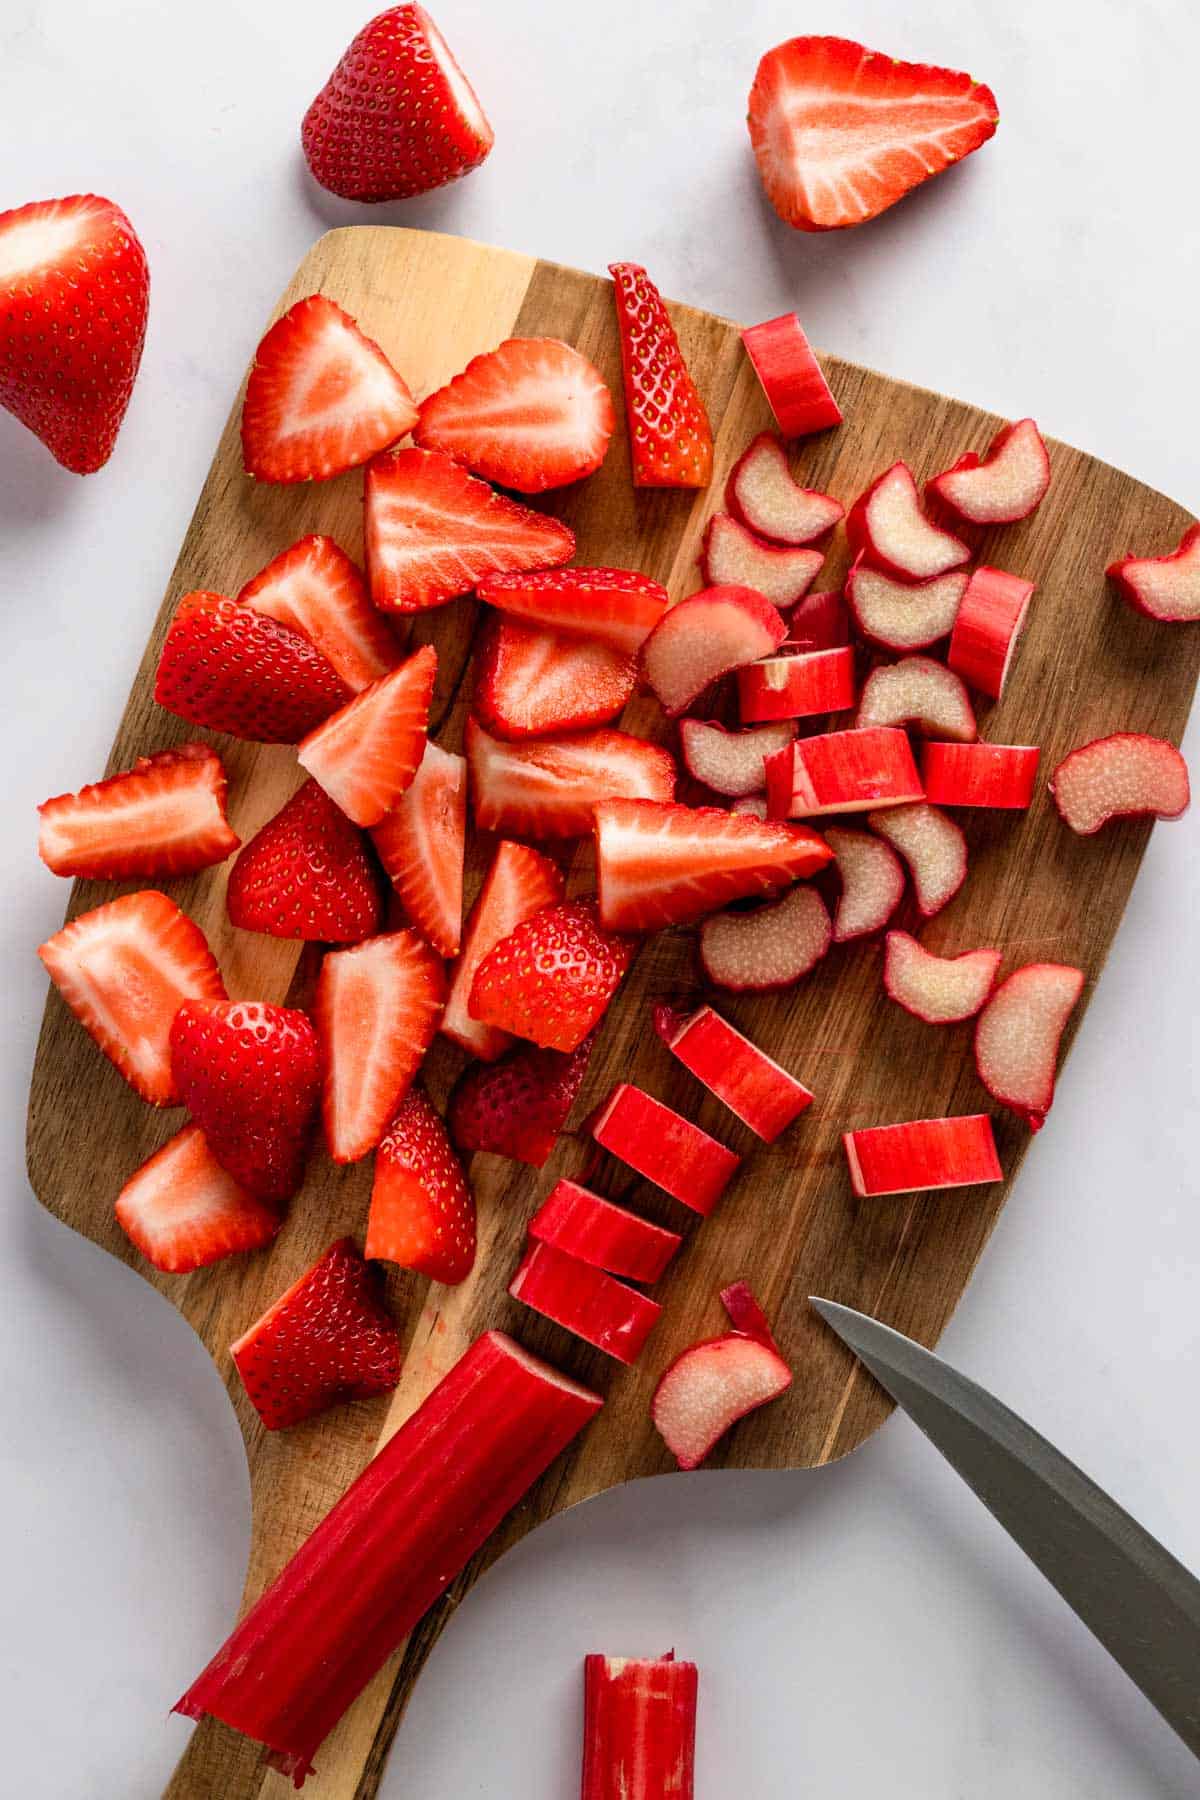 fresh strawberries and rhubarb on a wooden cutting board